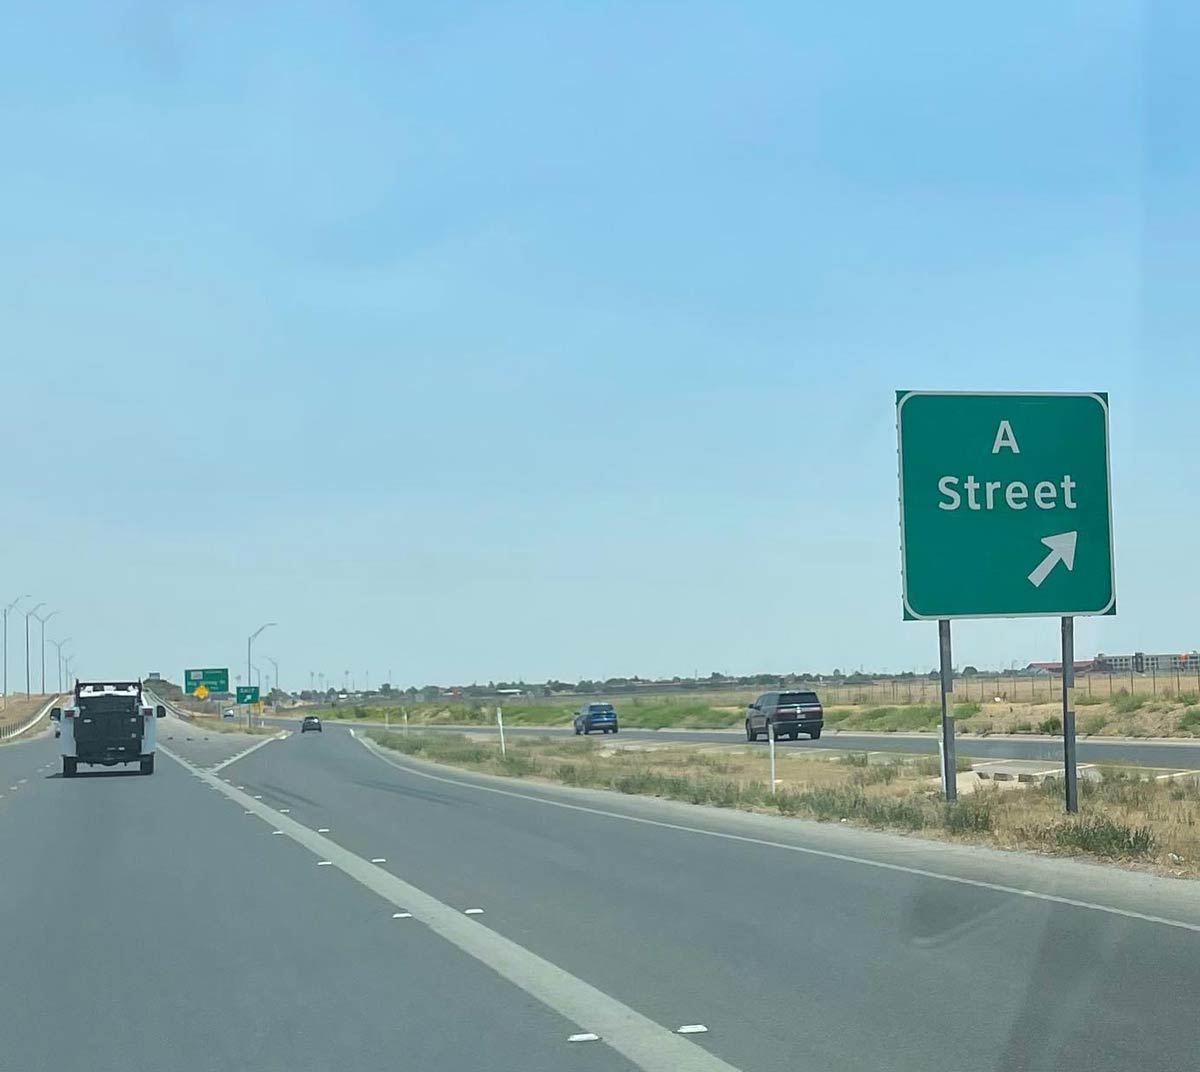 Minimal effort street sign